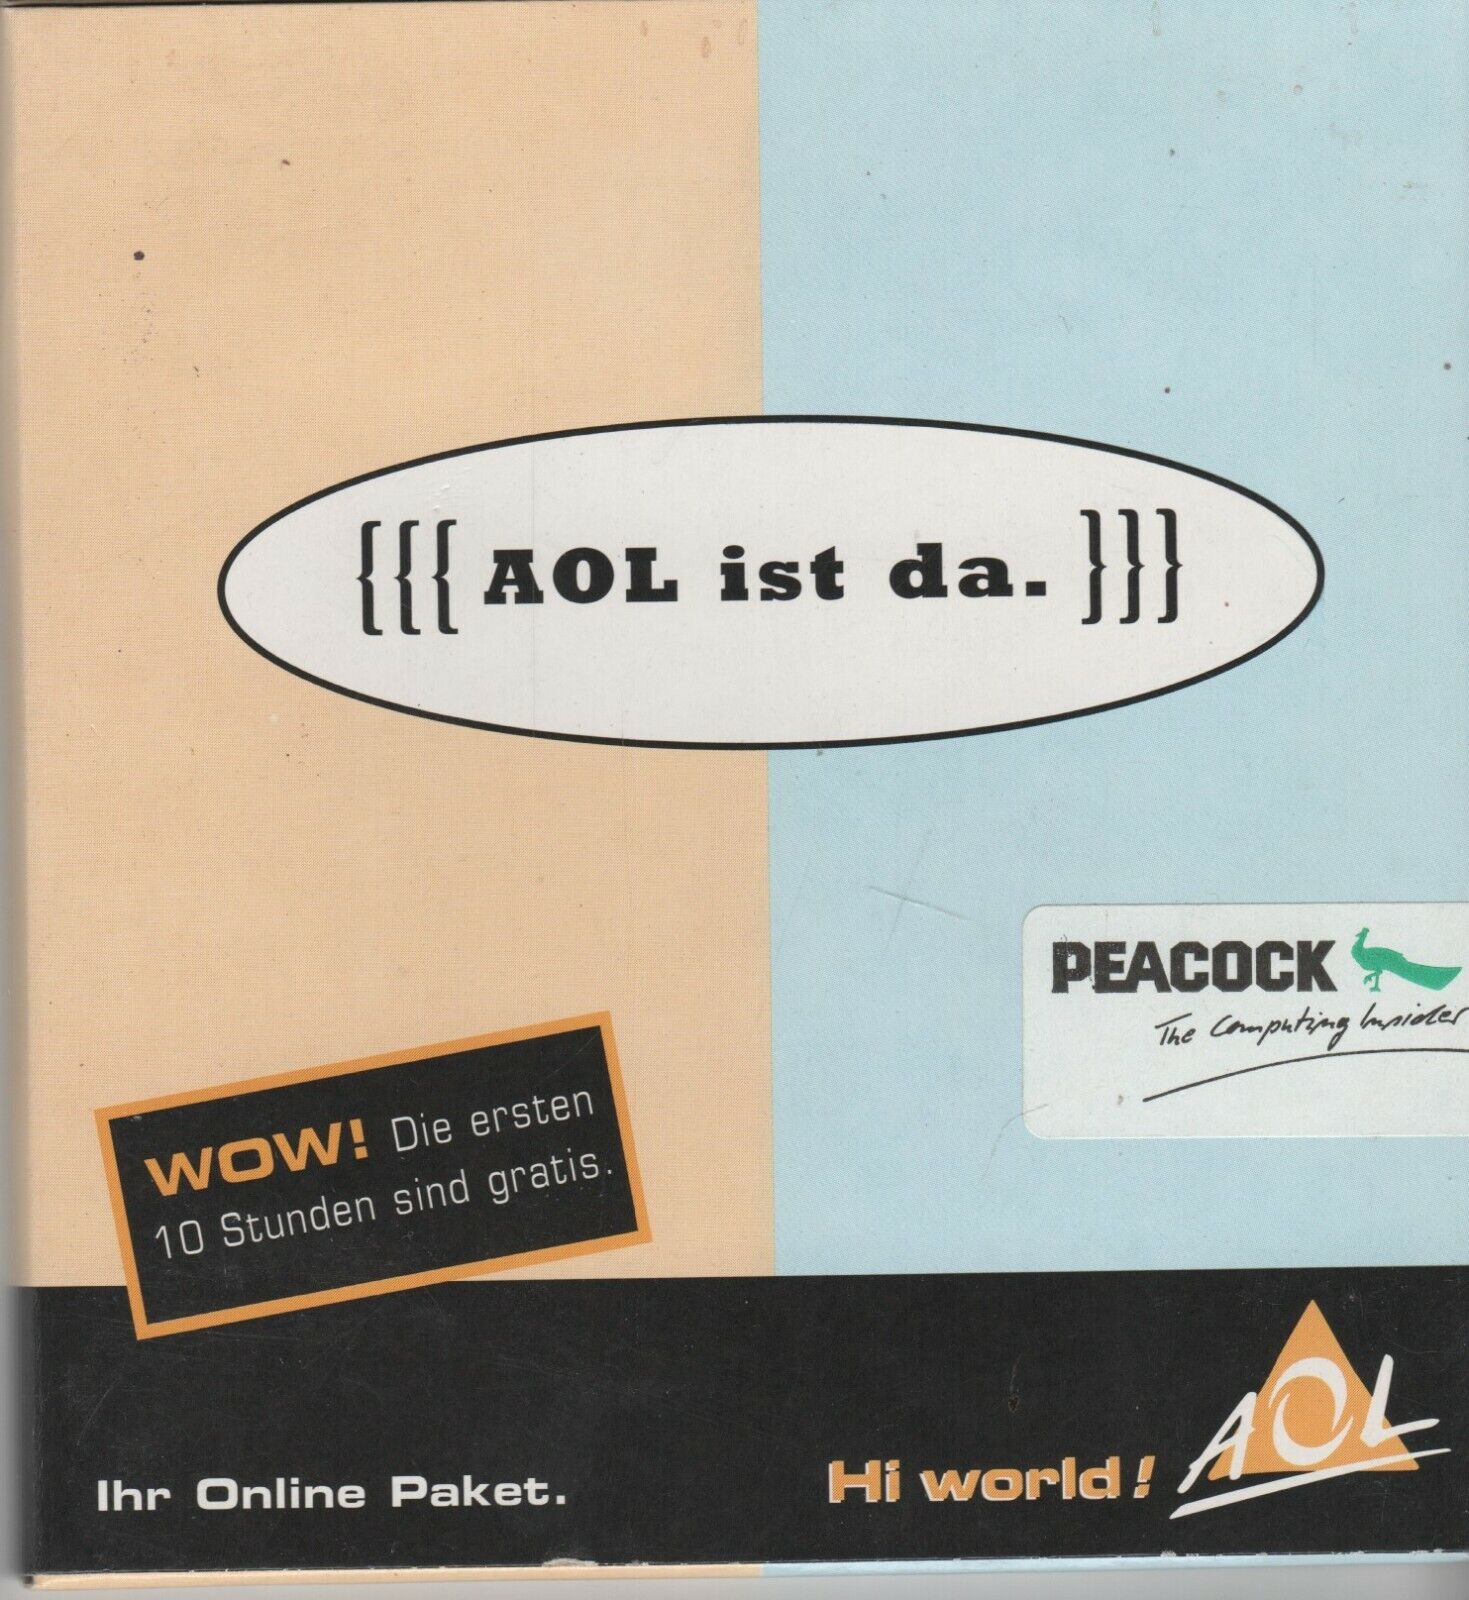 ITHistory (199X) IBM Software: AOL IST DA Hi World (Peacock) Online Paket German